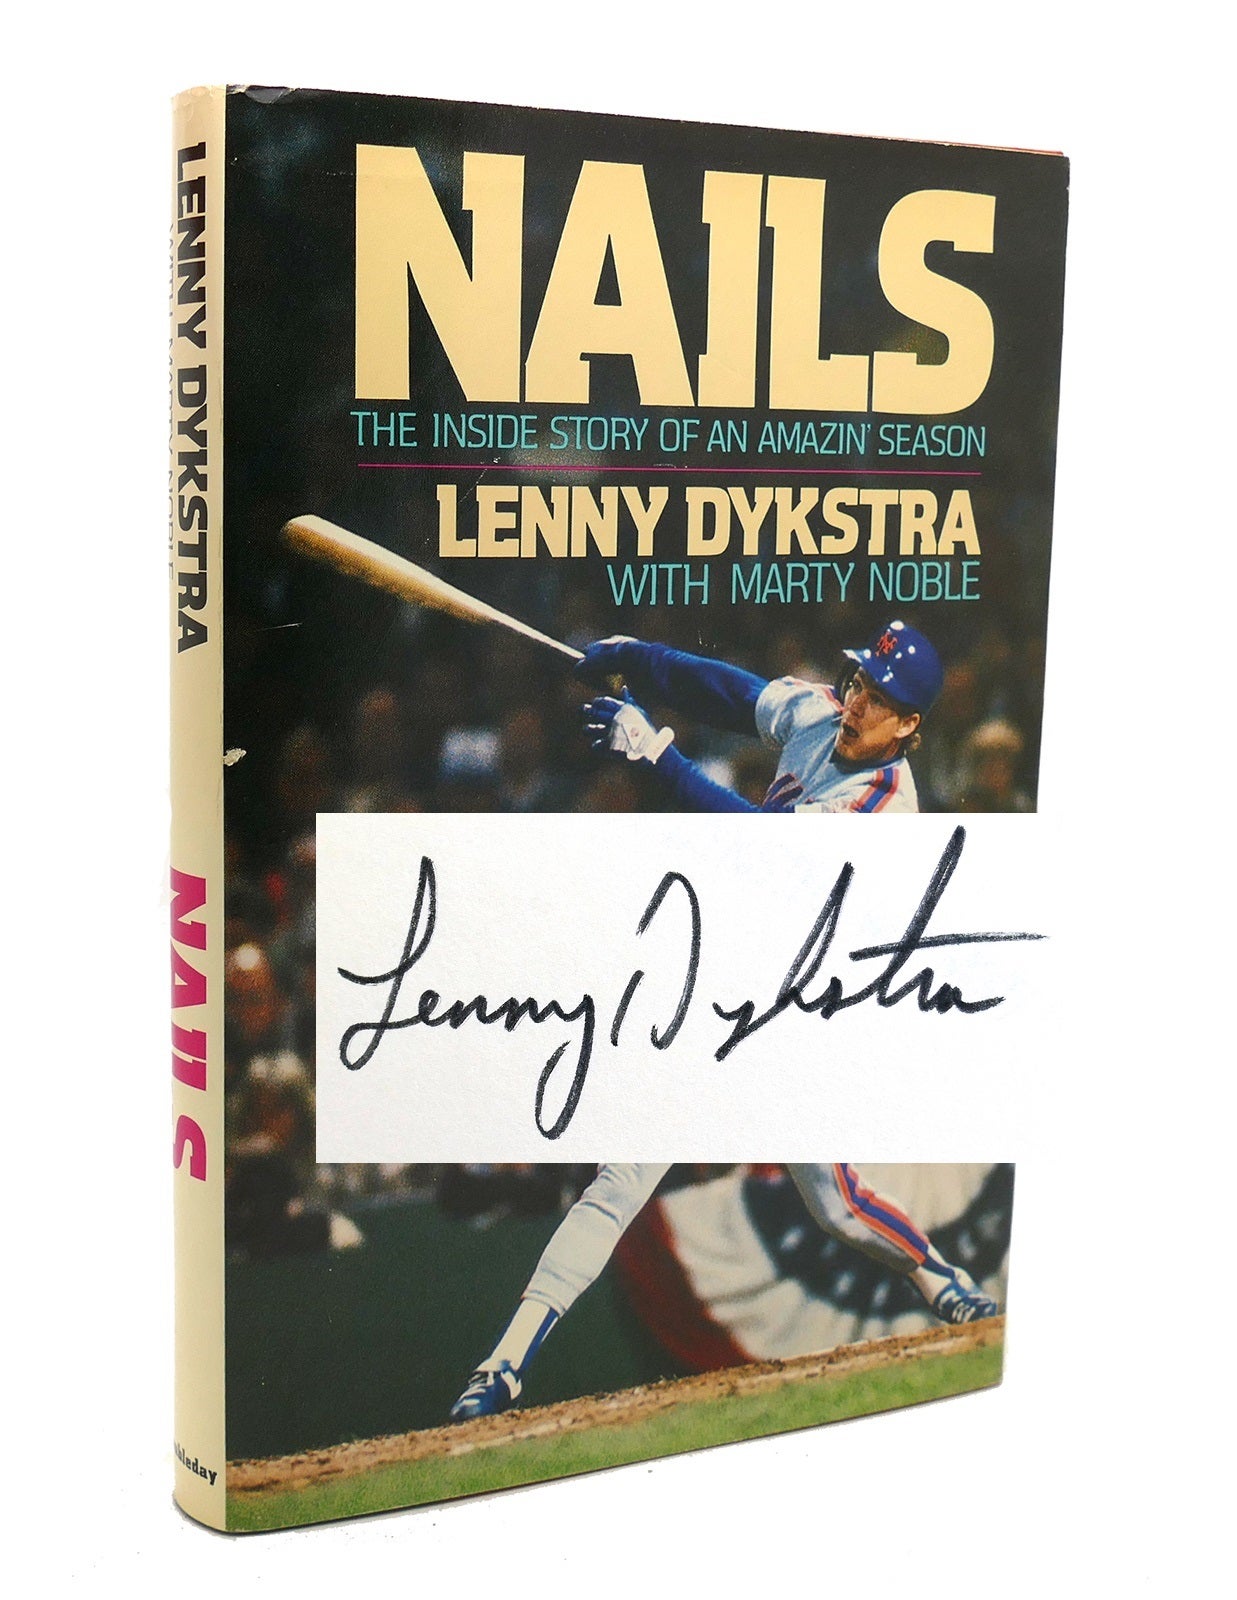 NAILS SIGNED 1st the Inside Story of an Amazin' Season, Lenny Dykstra